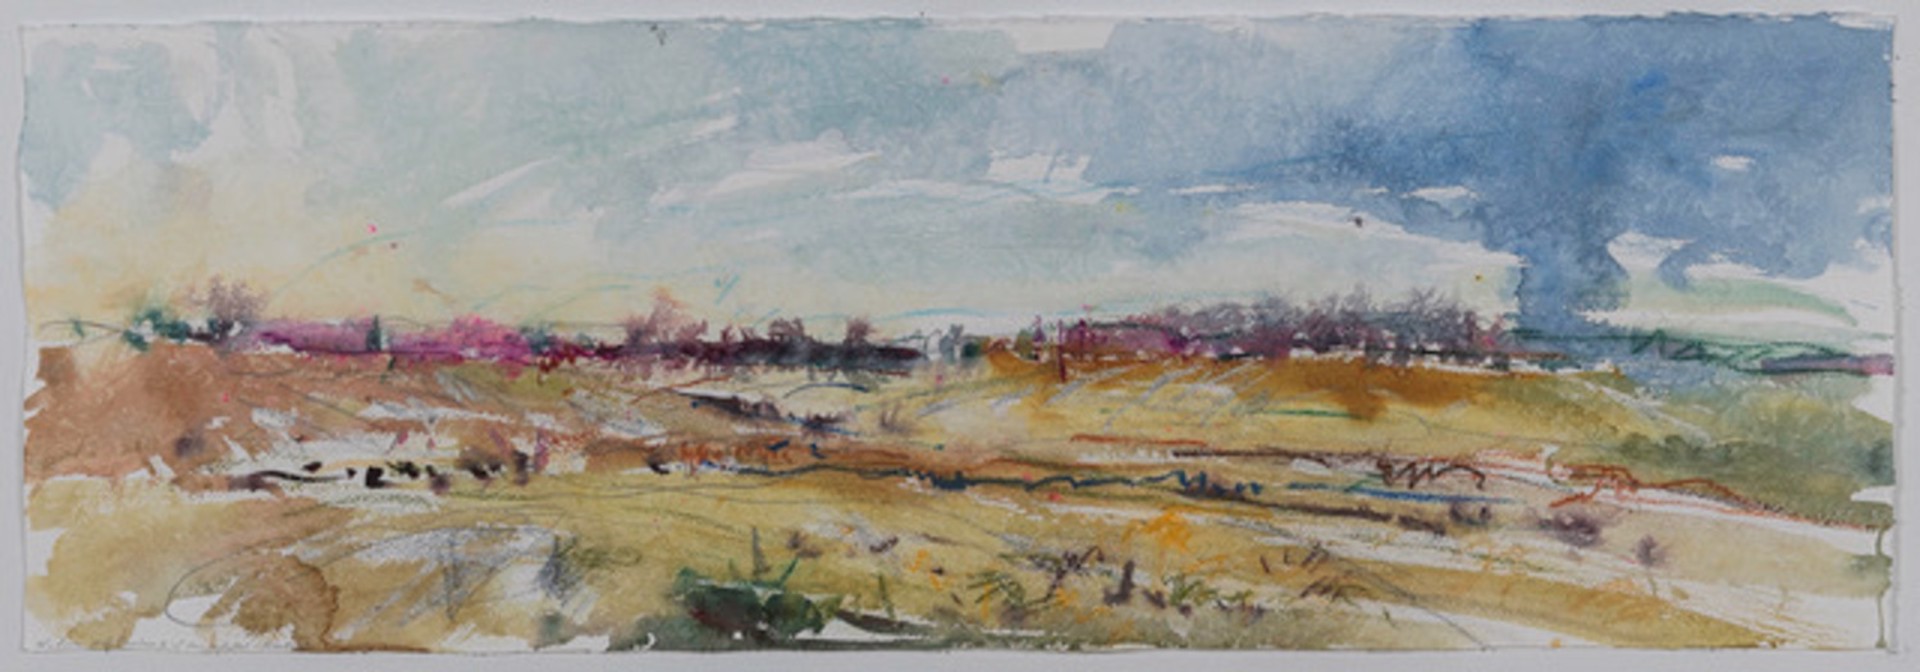 Peel Plain, November by Jim Reid